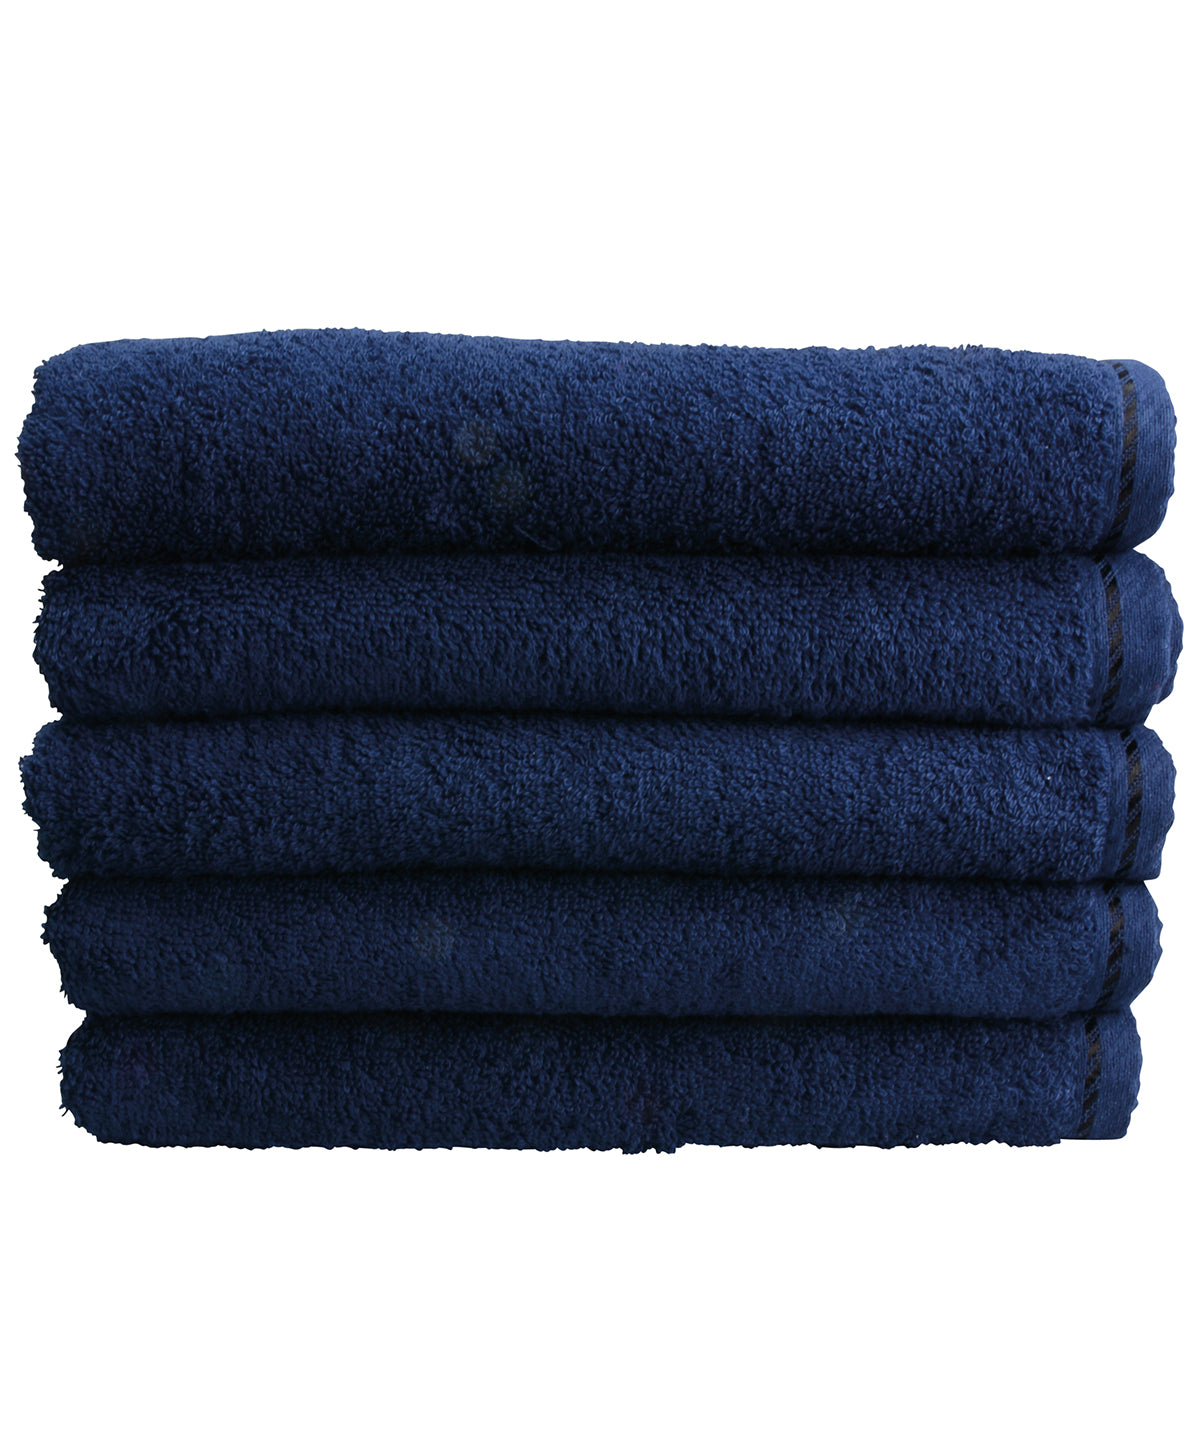 Personalised Towels - Navy A&R Towels ARTG® Hand towel